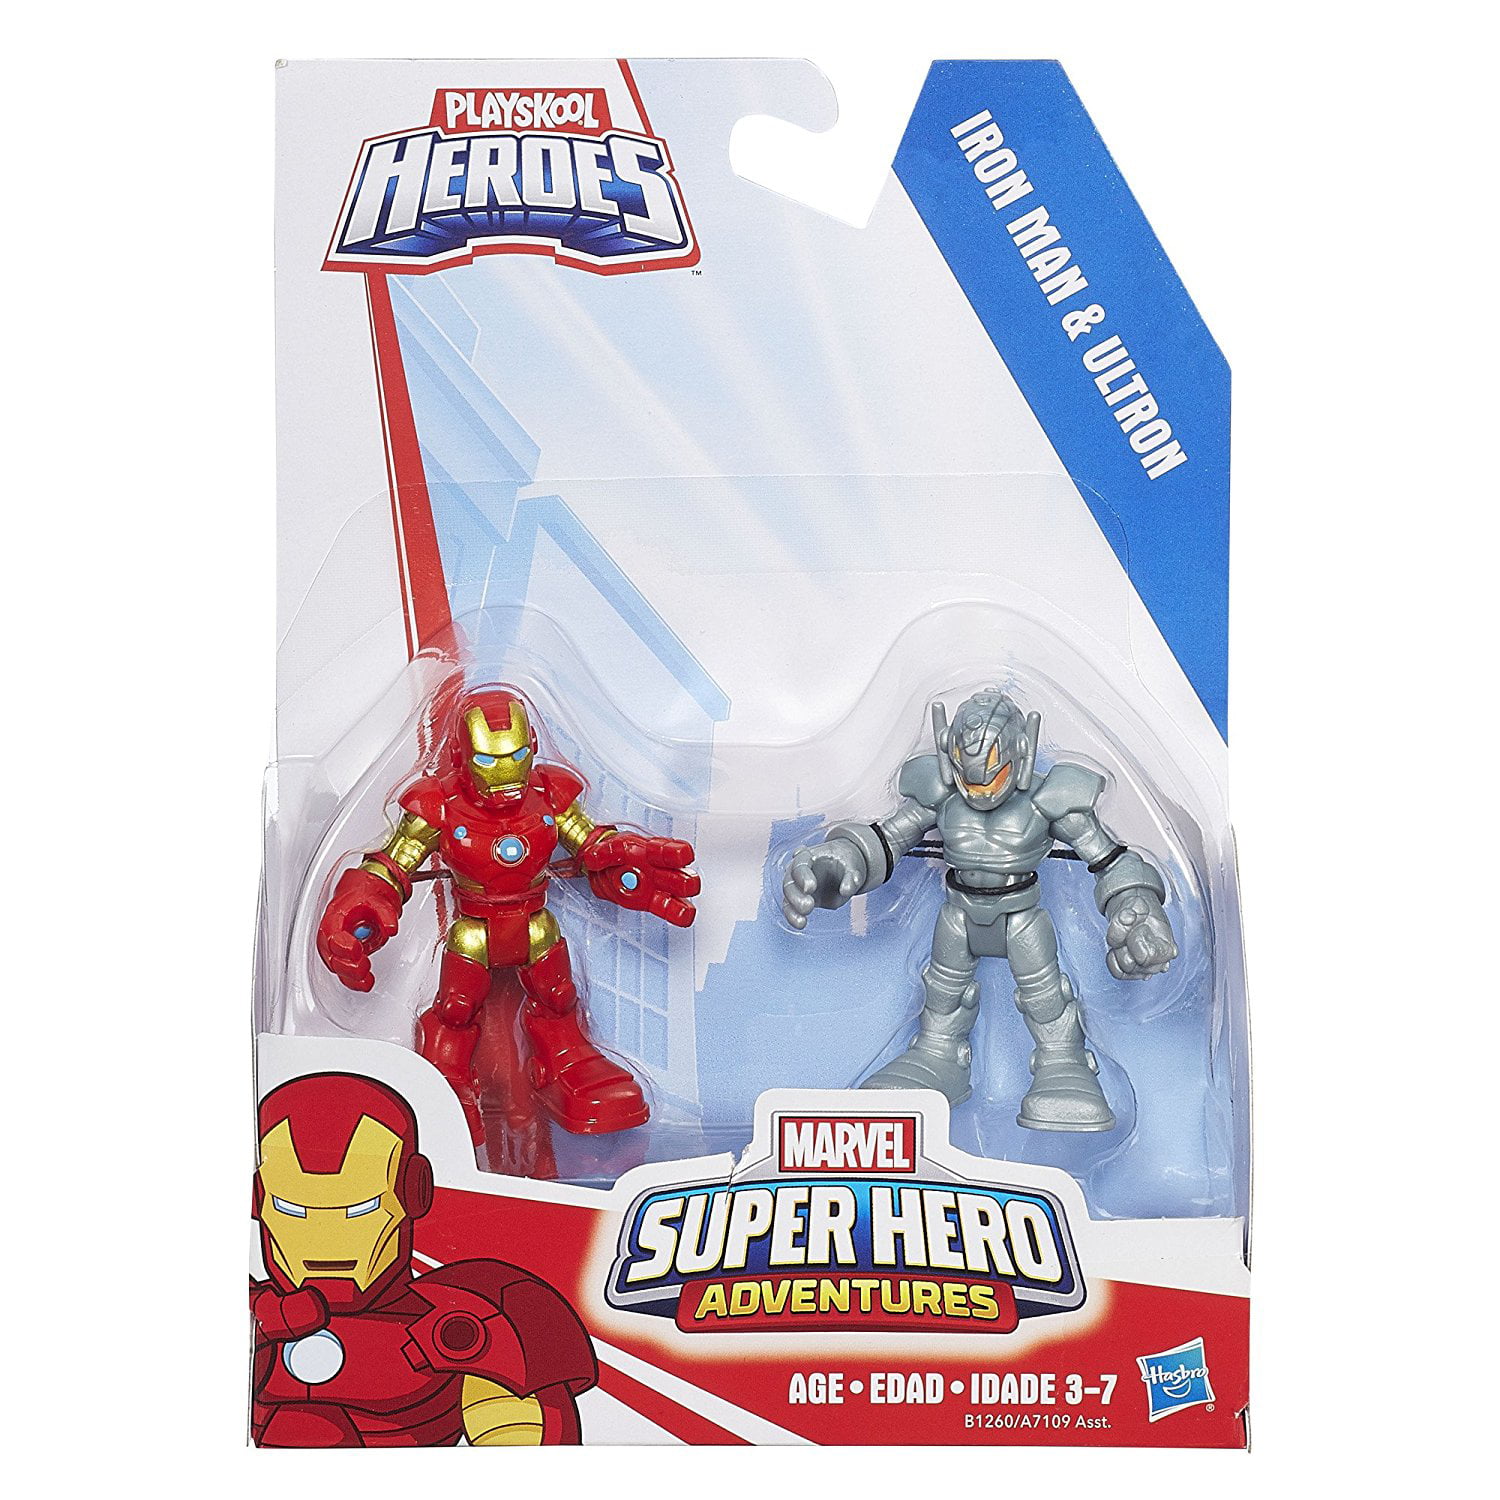 Hasbro Playskool Marvel Super Hero Adventures ULTRON figure Avengers villain